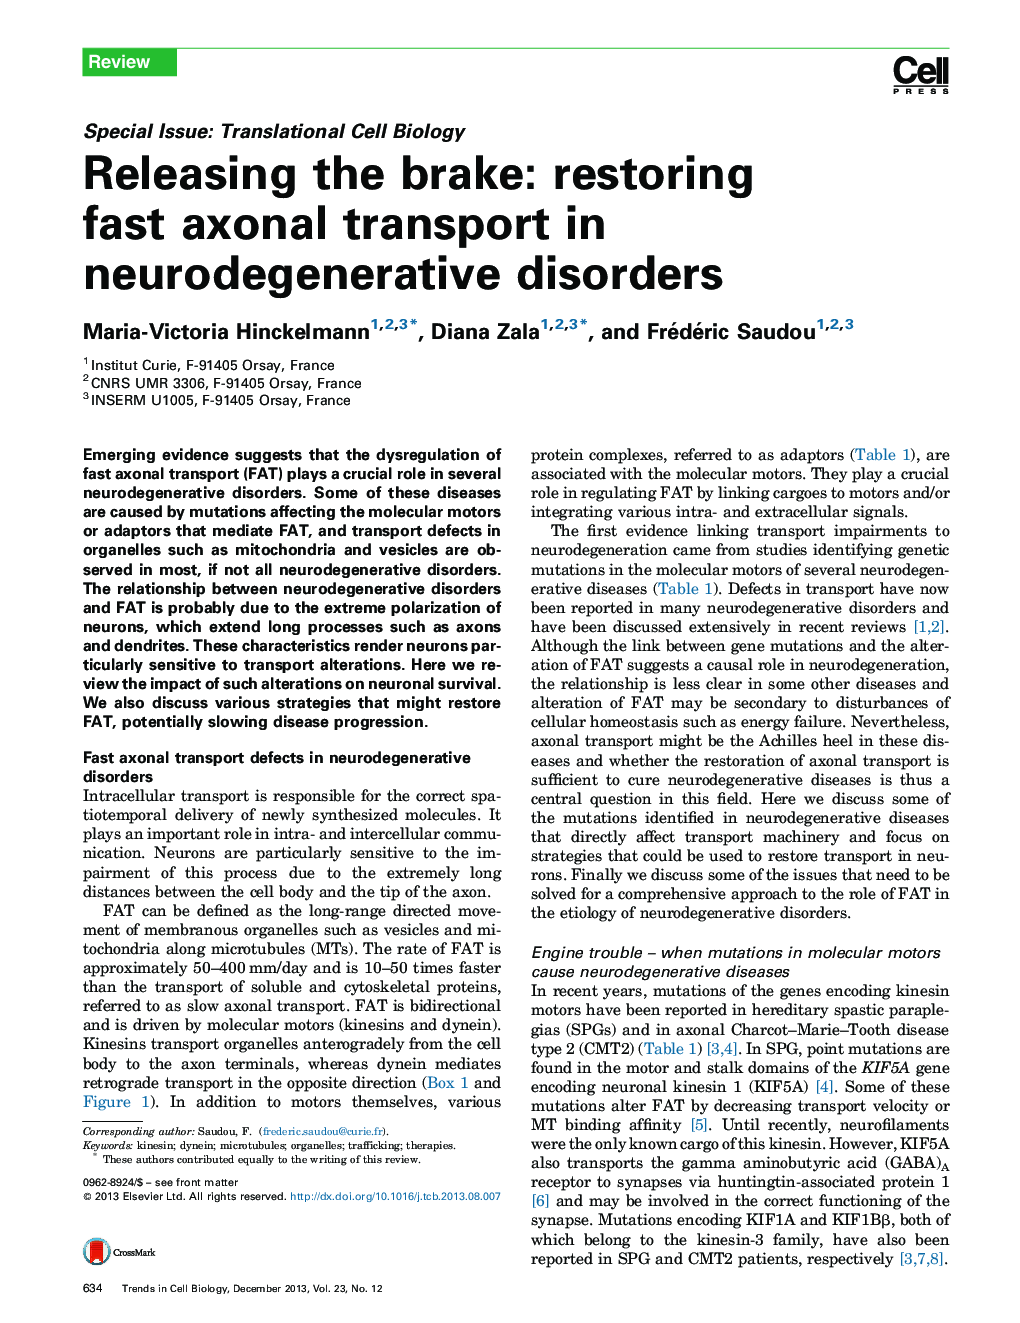 Releasing the brake: restoring fast axonal transport in neurodegenerative disorders